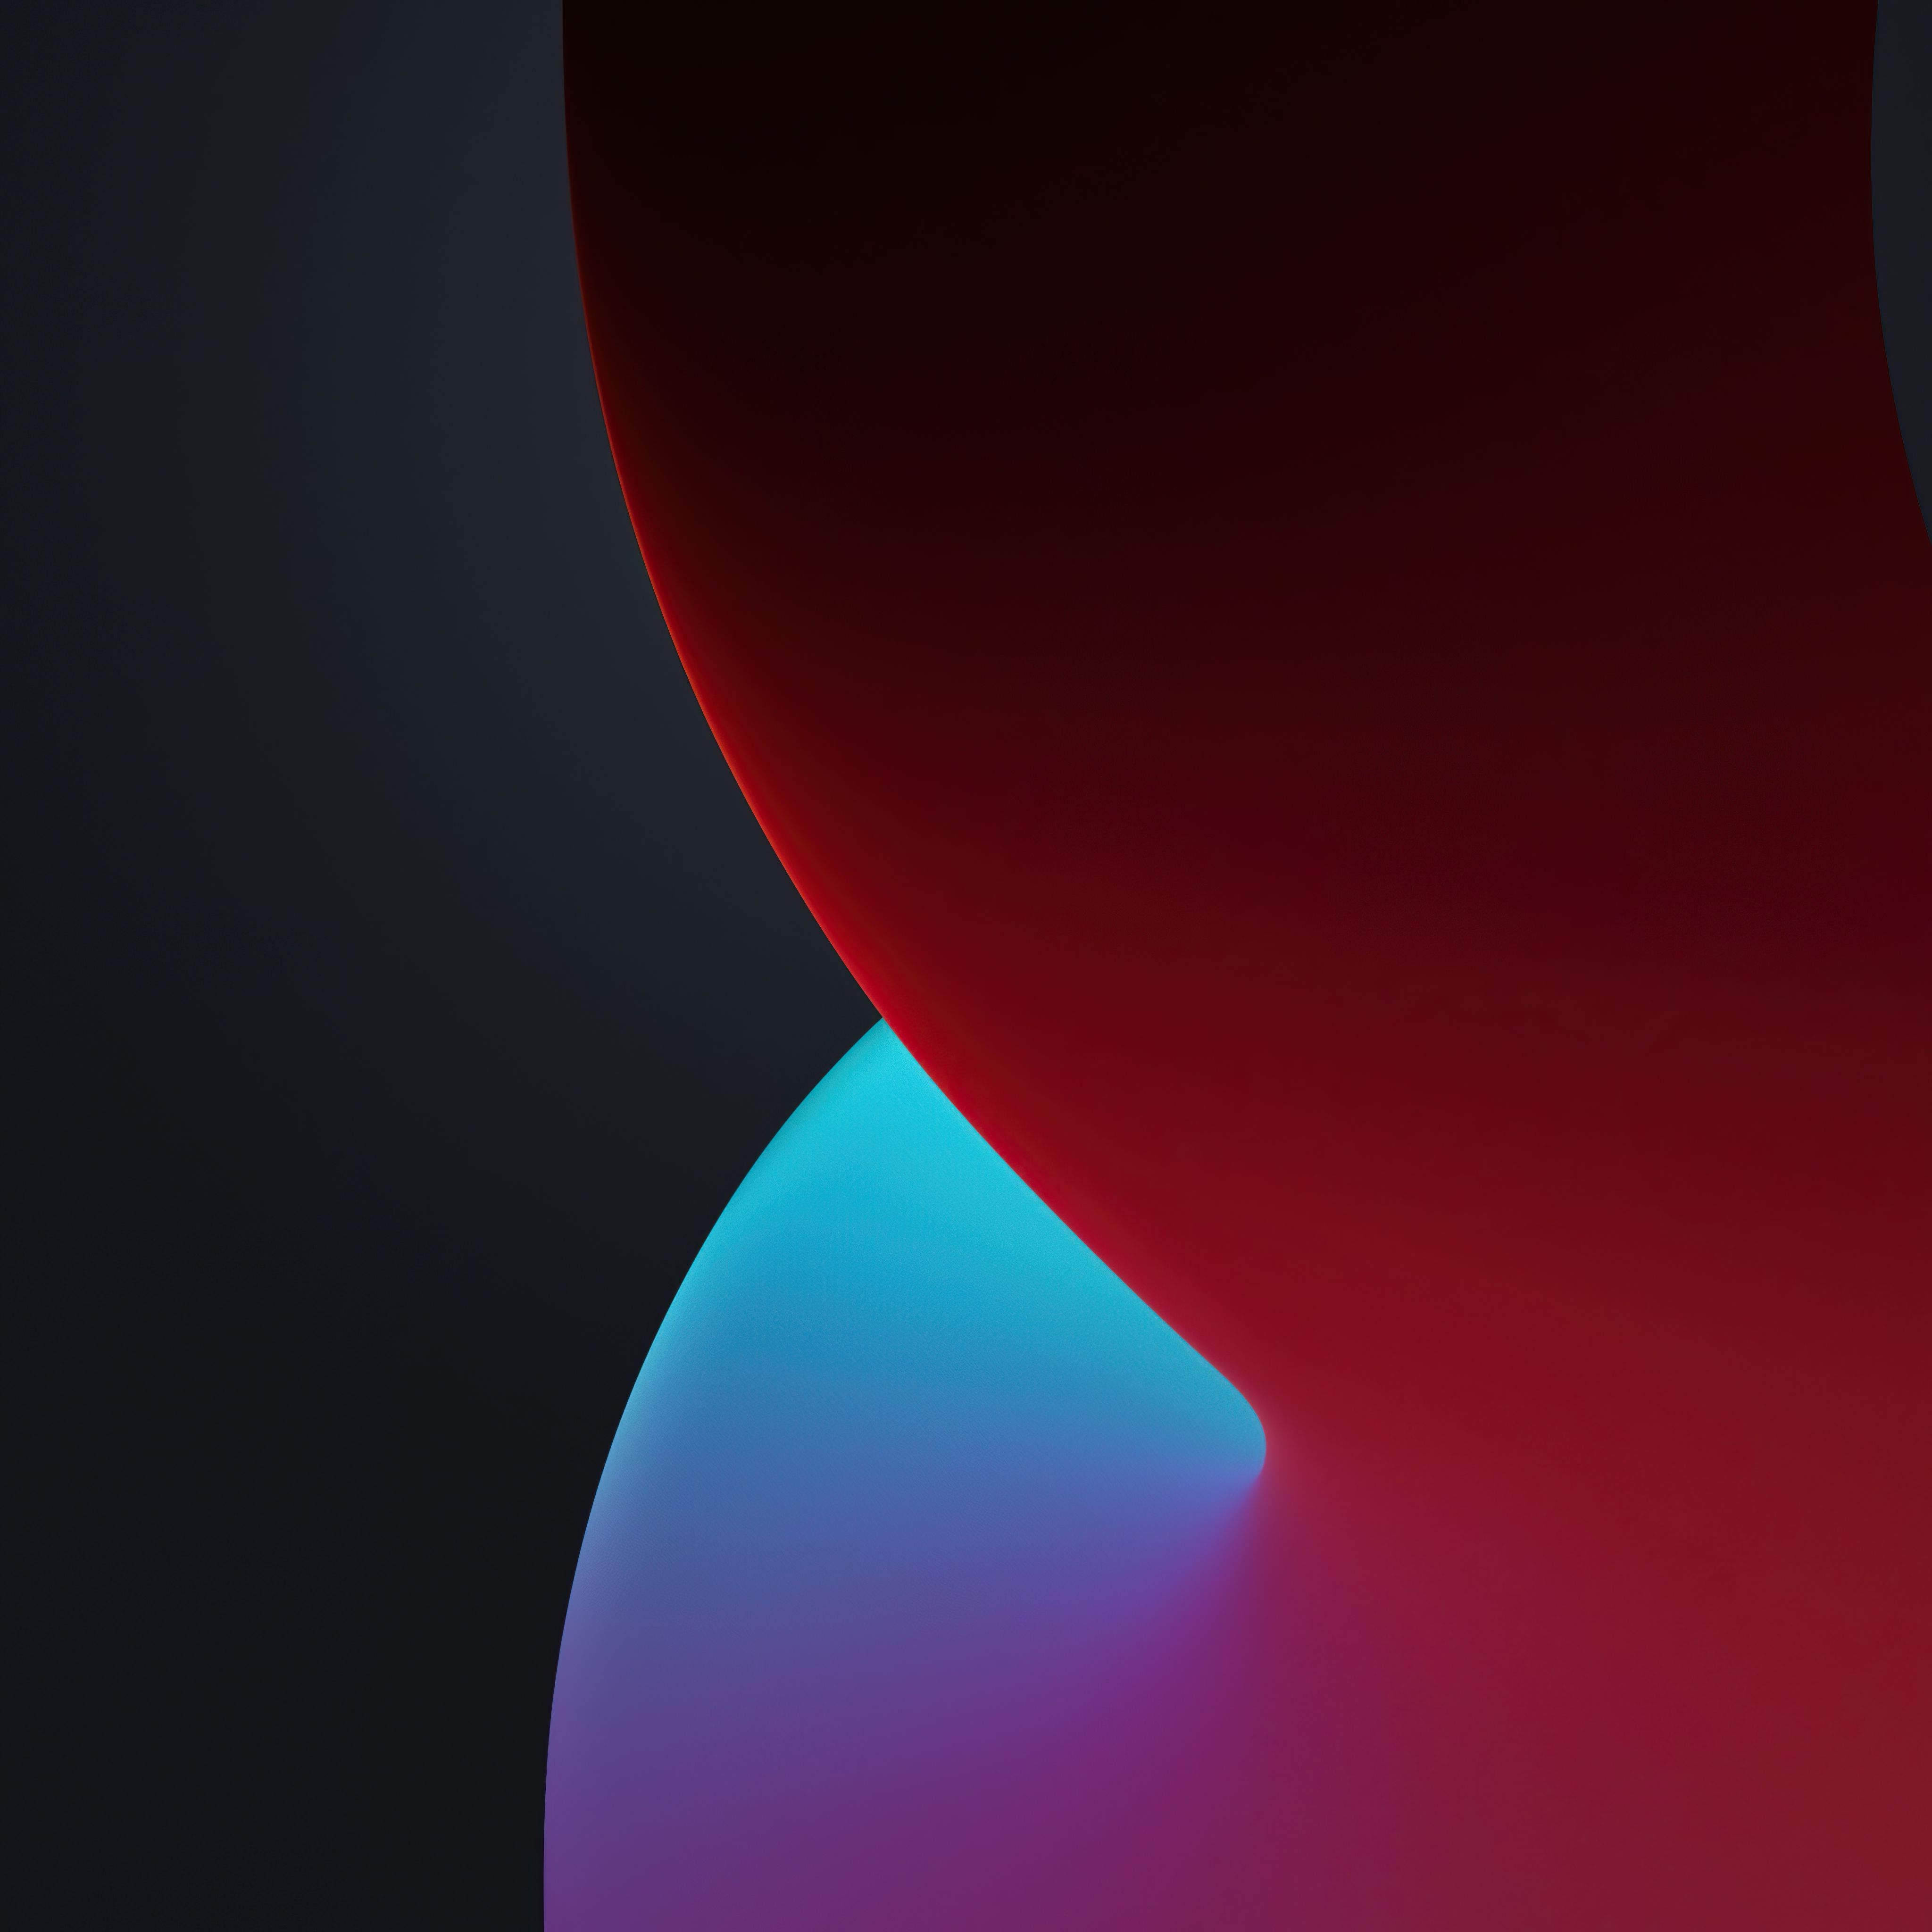 iPhone SE Wallpaper 4K, Stock, iOS 14, Red, Light, 2020